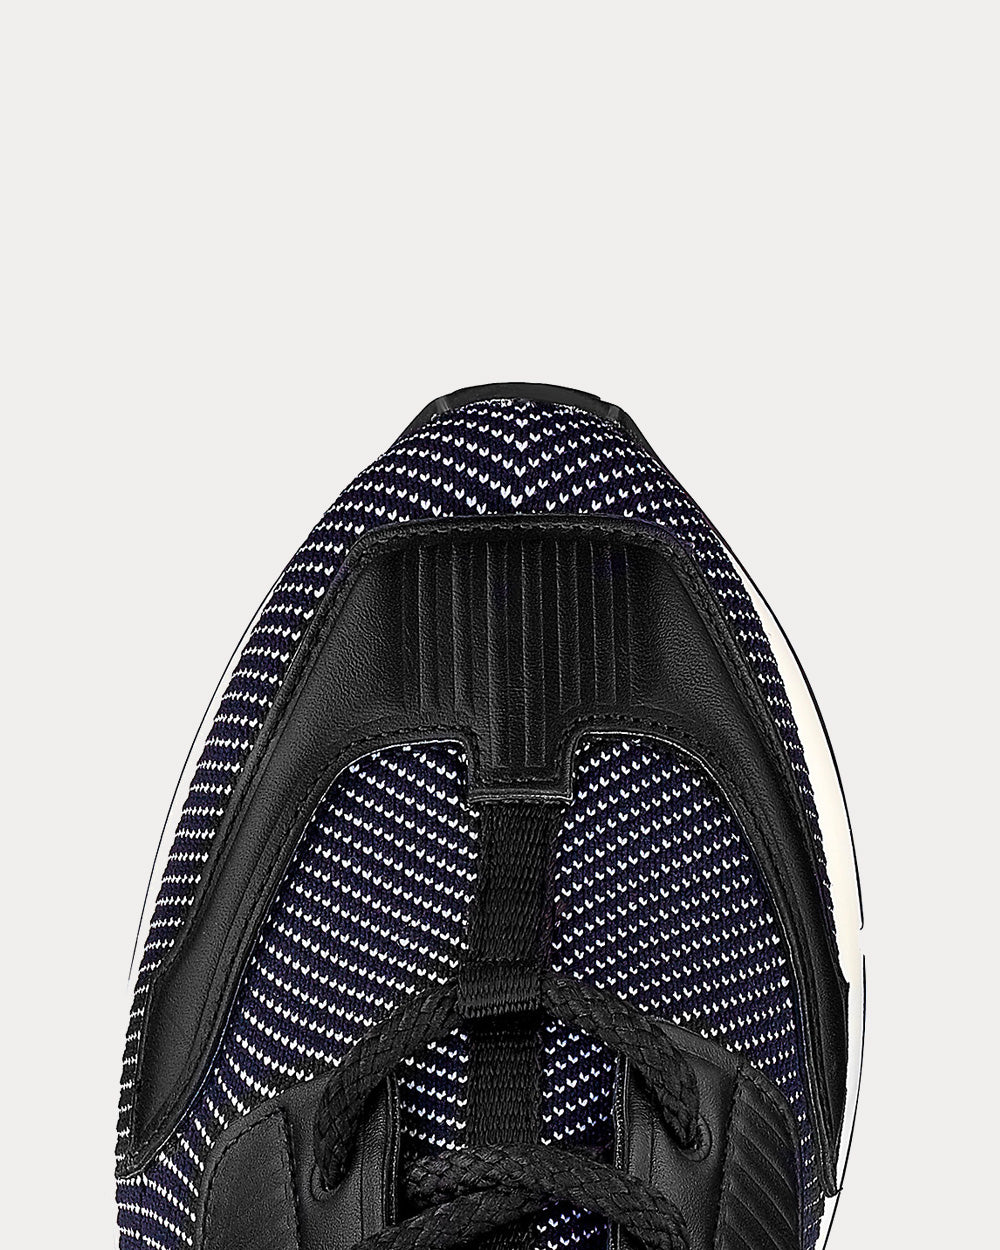 Hermès - Athlete Multicolore Noir Low Top Sneakers